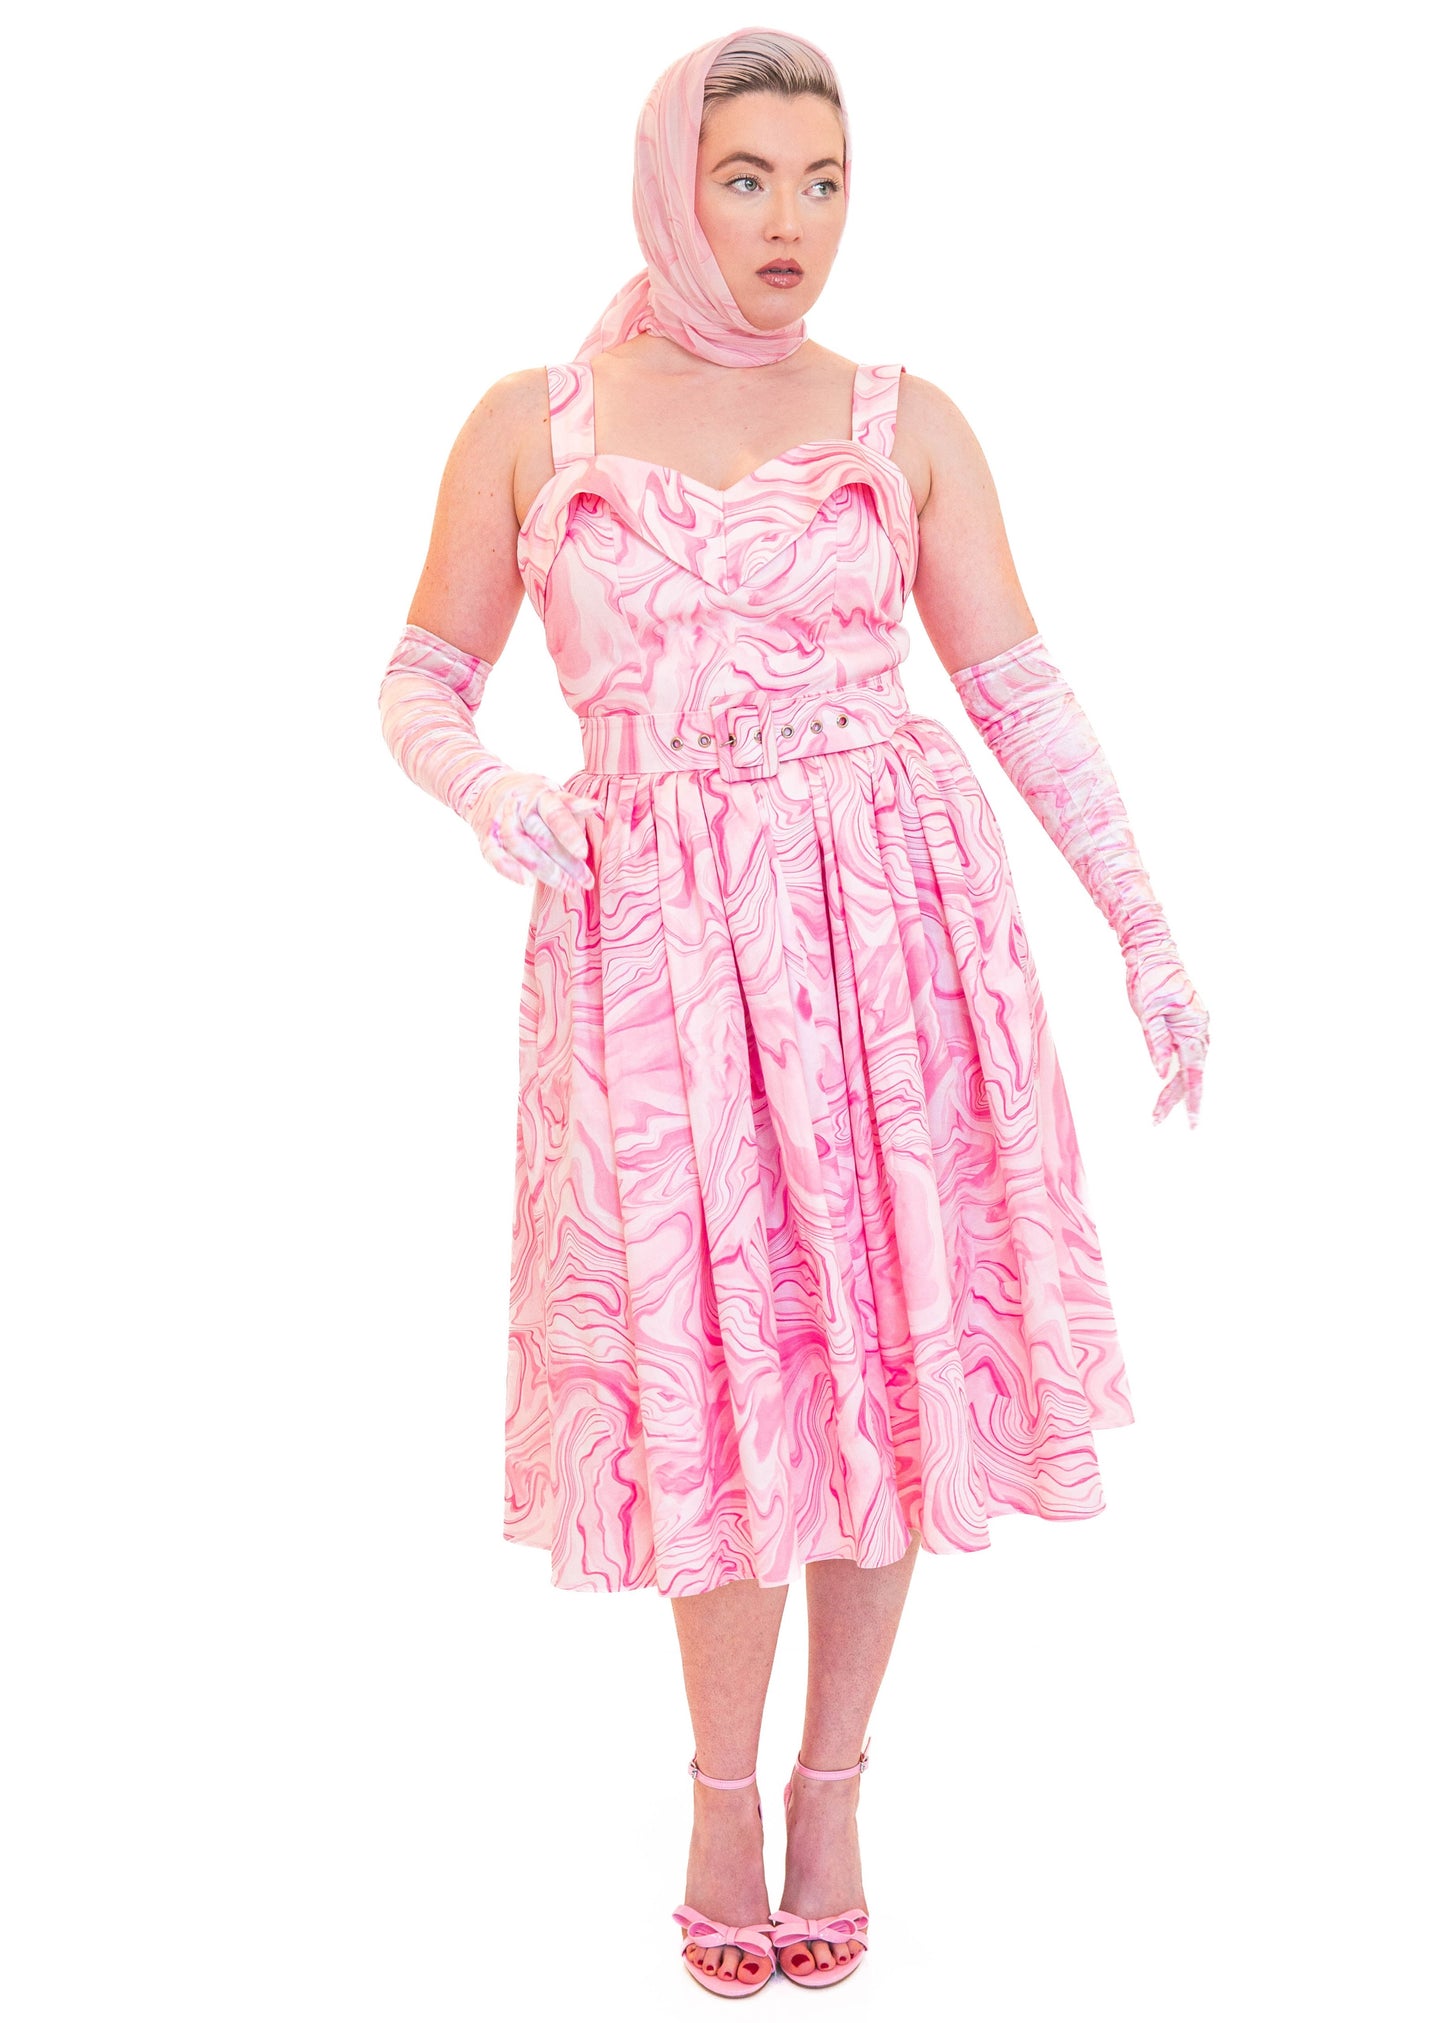 The Rose Quartz Geode Dress - Pink